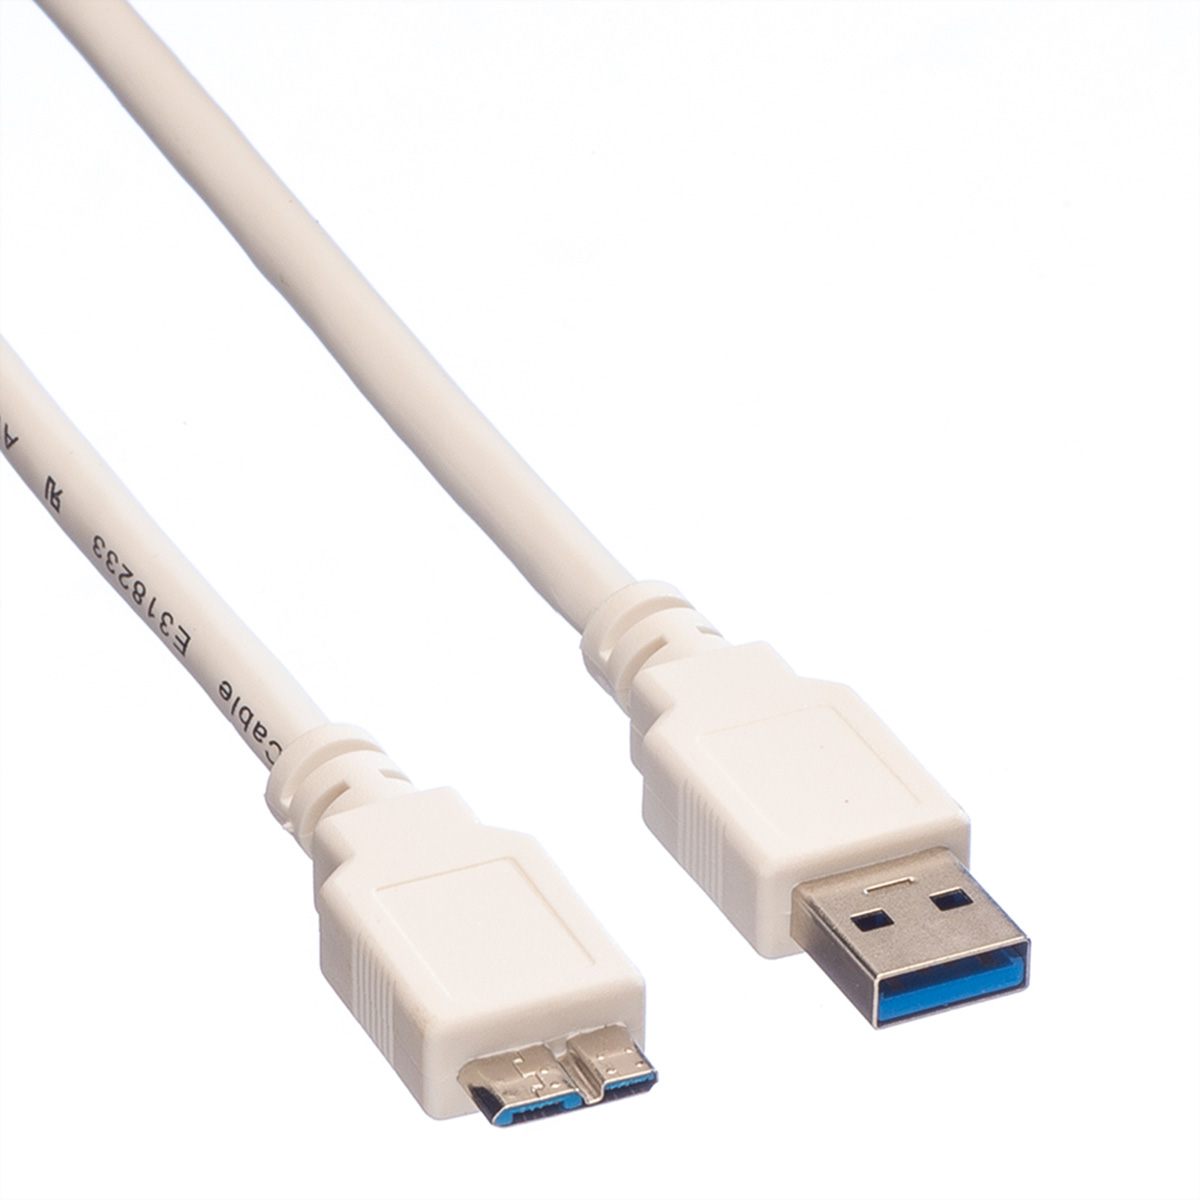 A Kabel, Micro 1 3.2 B Micro ST Gen USB VALUE Kabel ST 3.2 USB -